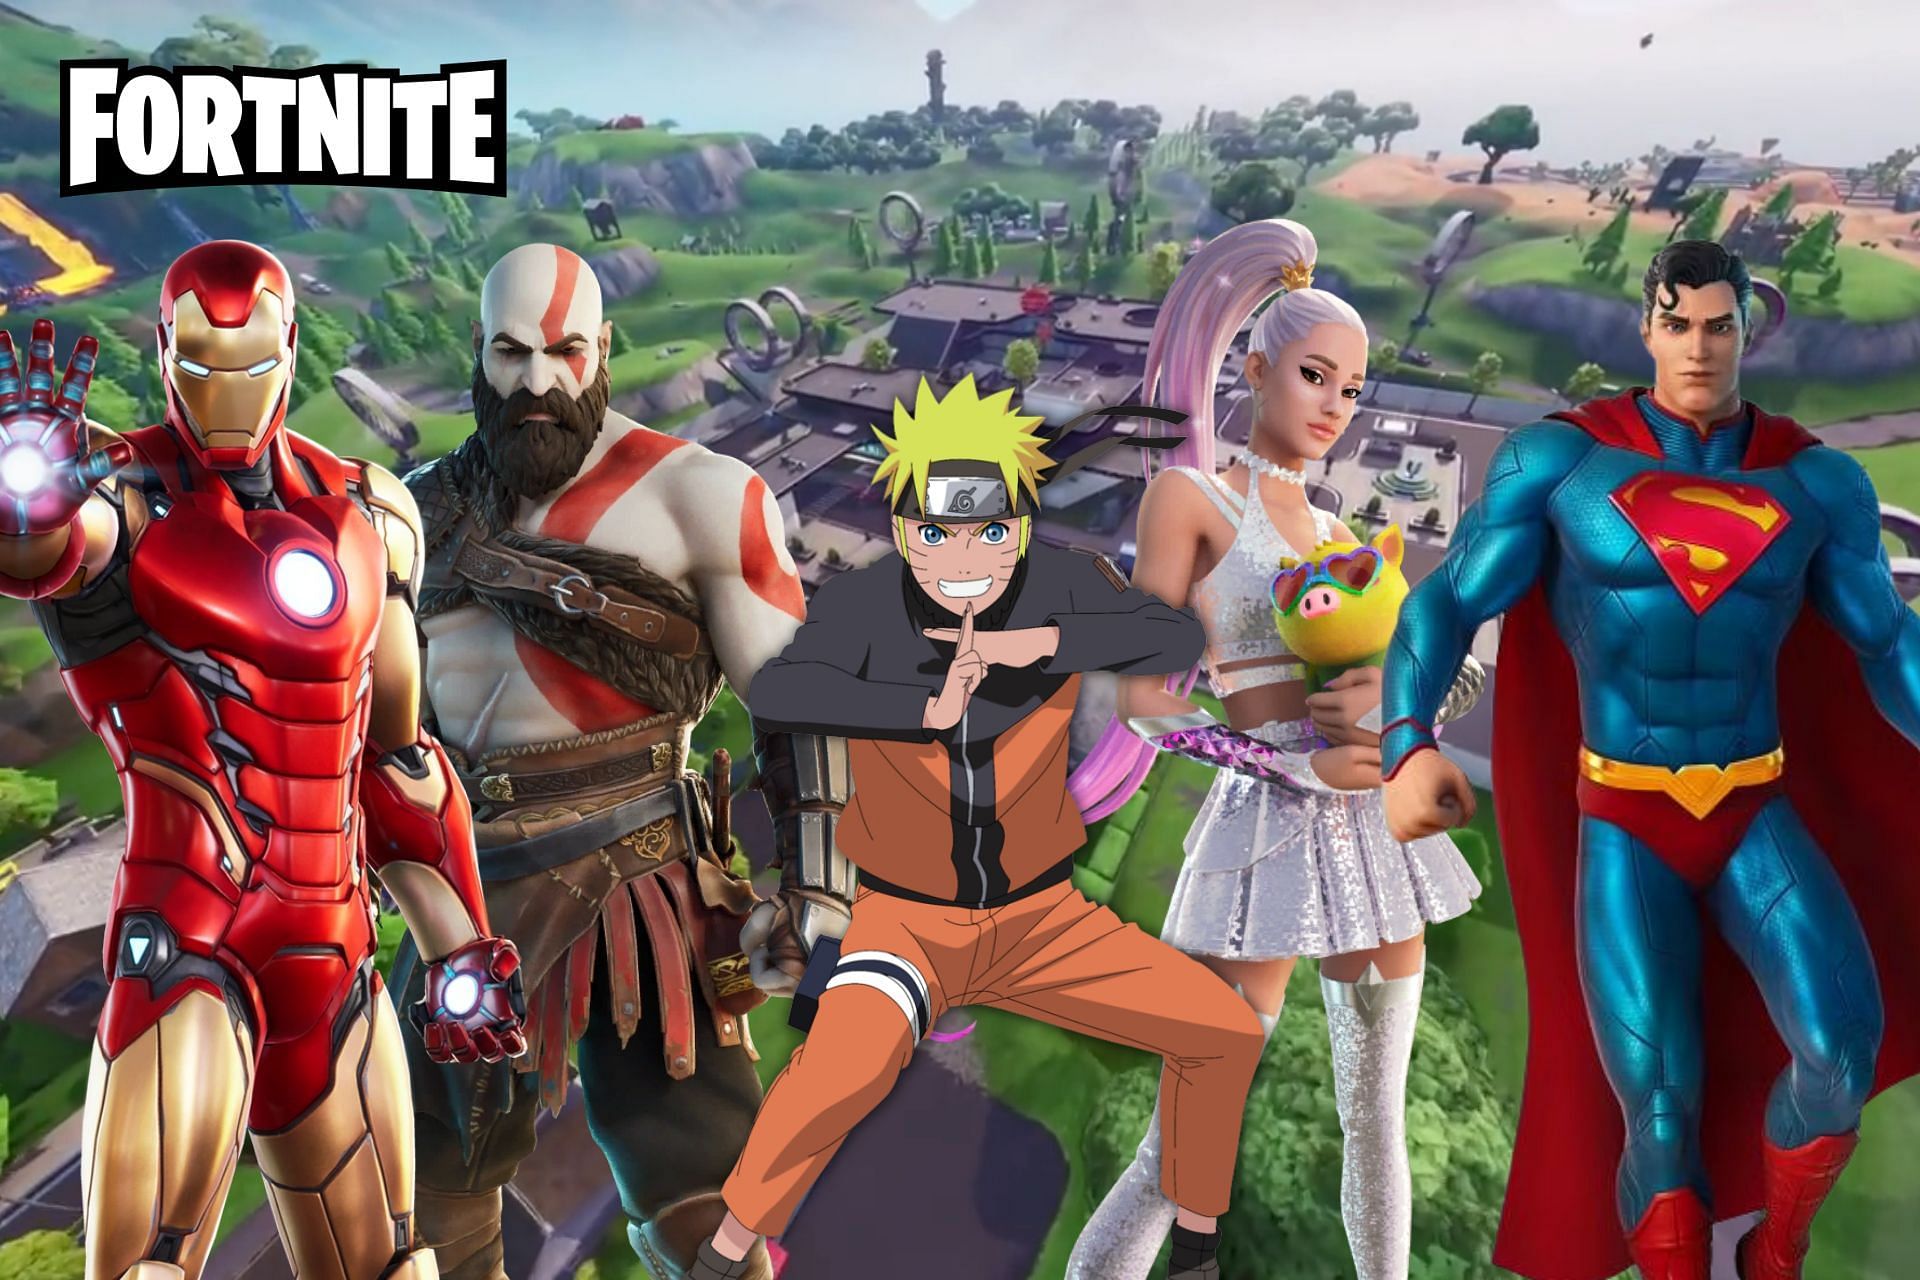 Fortnite Naruto collaboration marks the beginning of a metaverse (Image via Sportskeeda)